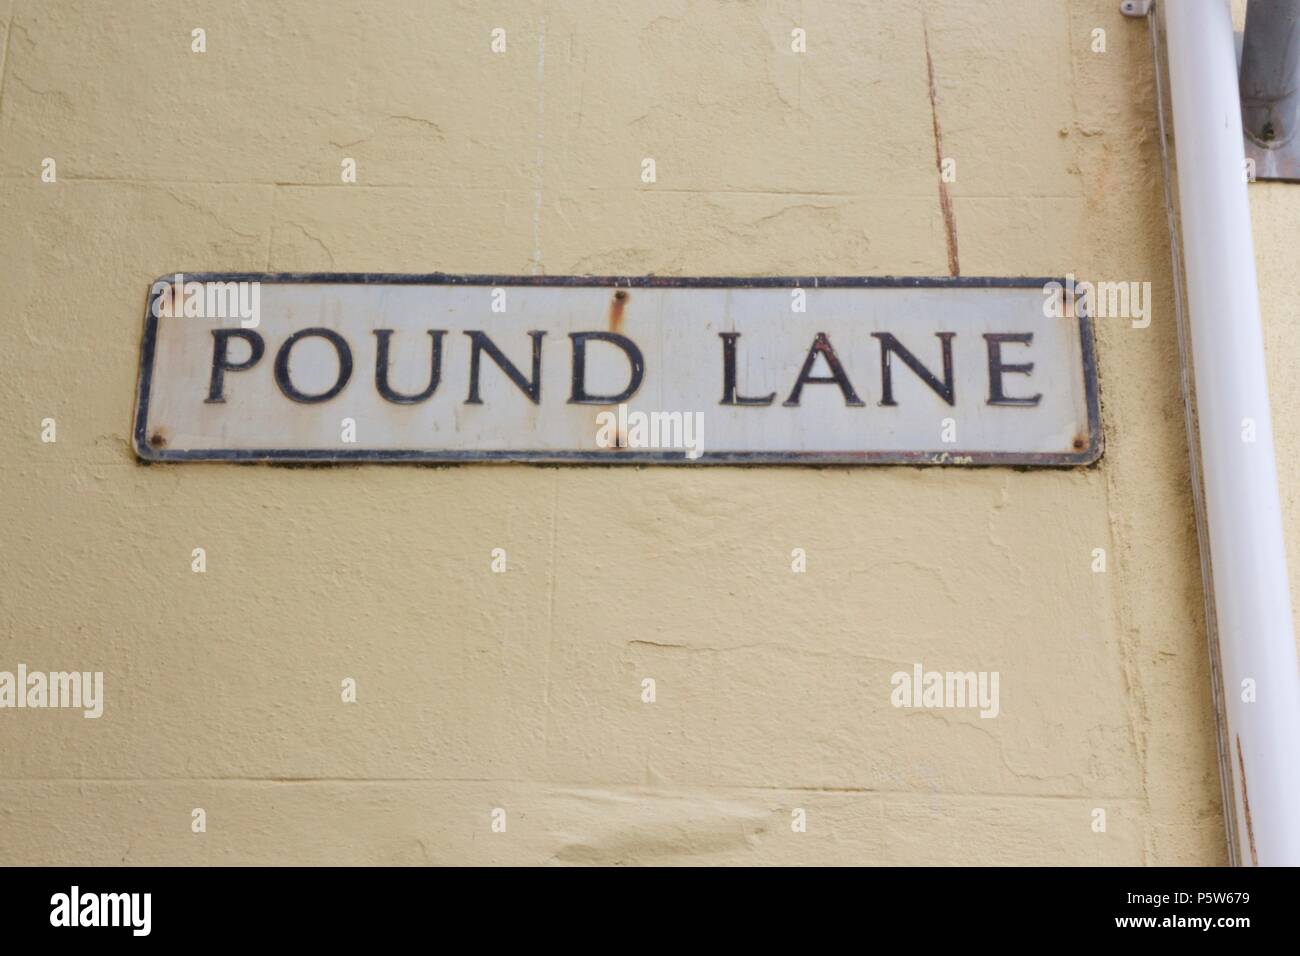 A road name sign in Teignmouth, South Devon called 'Pound Lane' Stock Photo